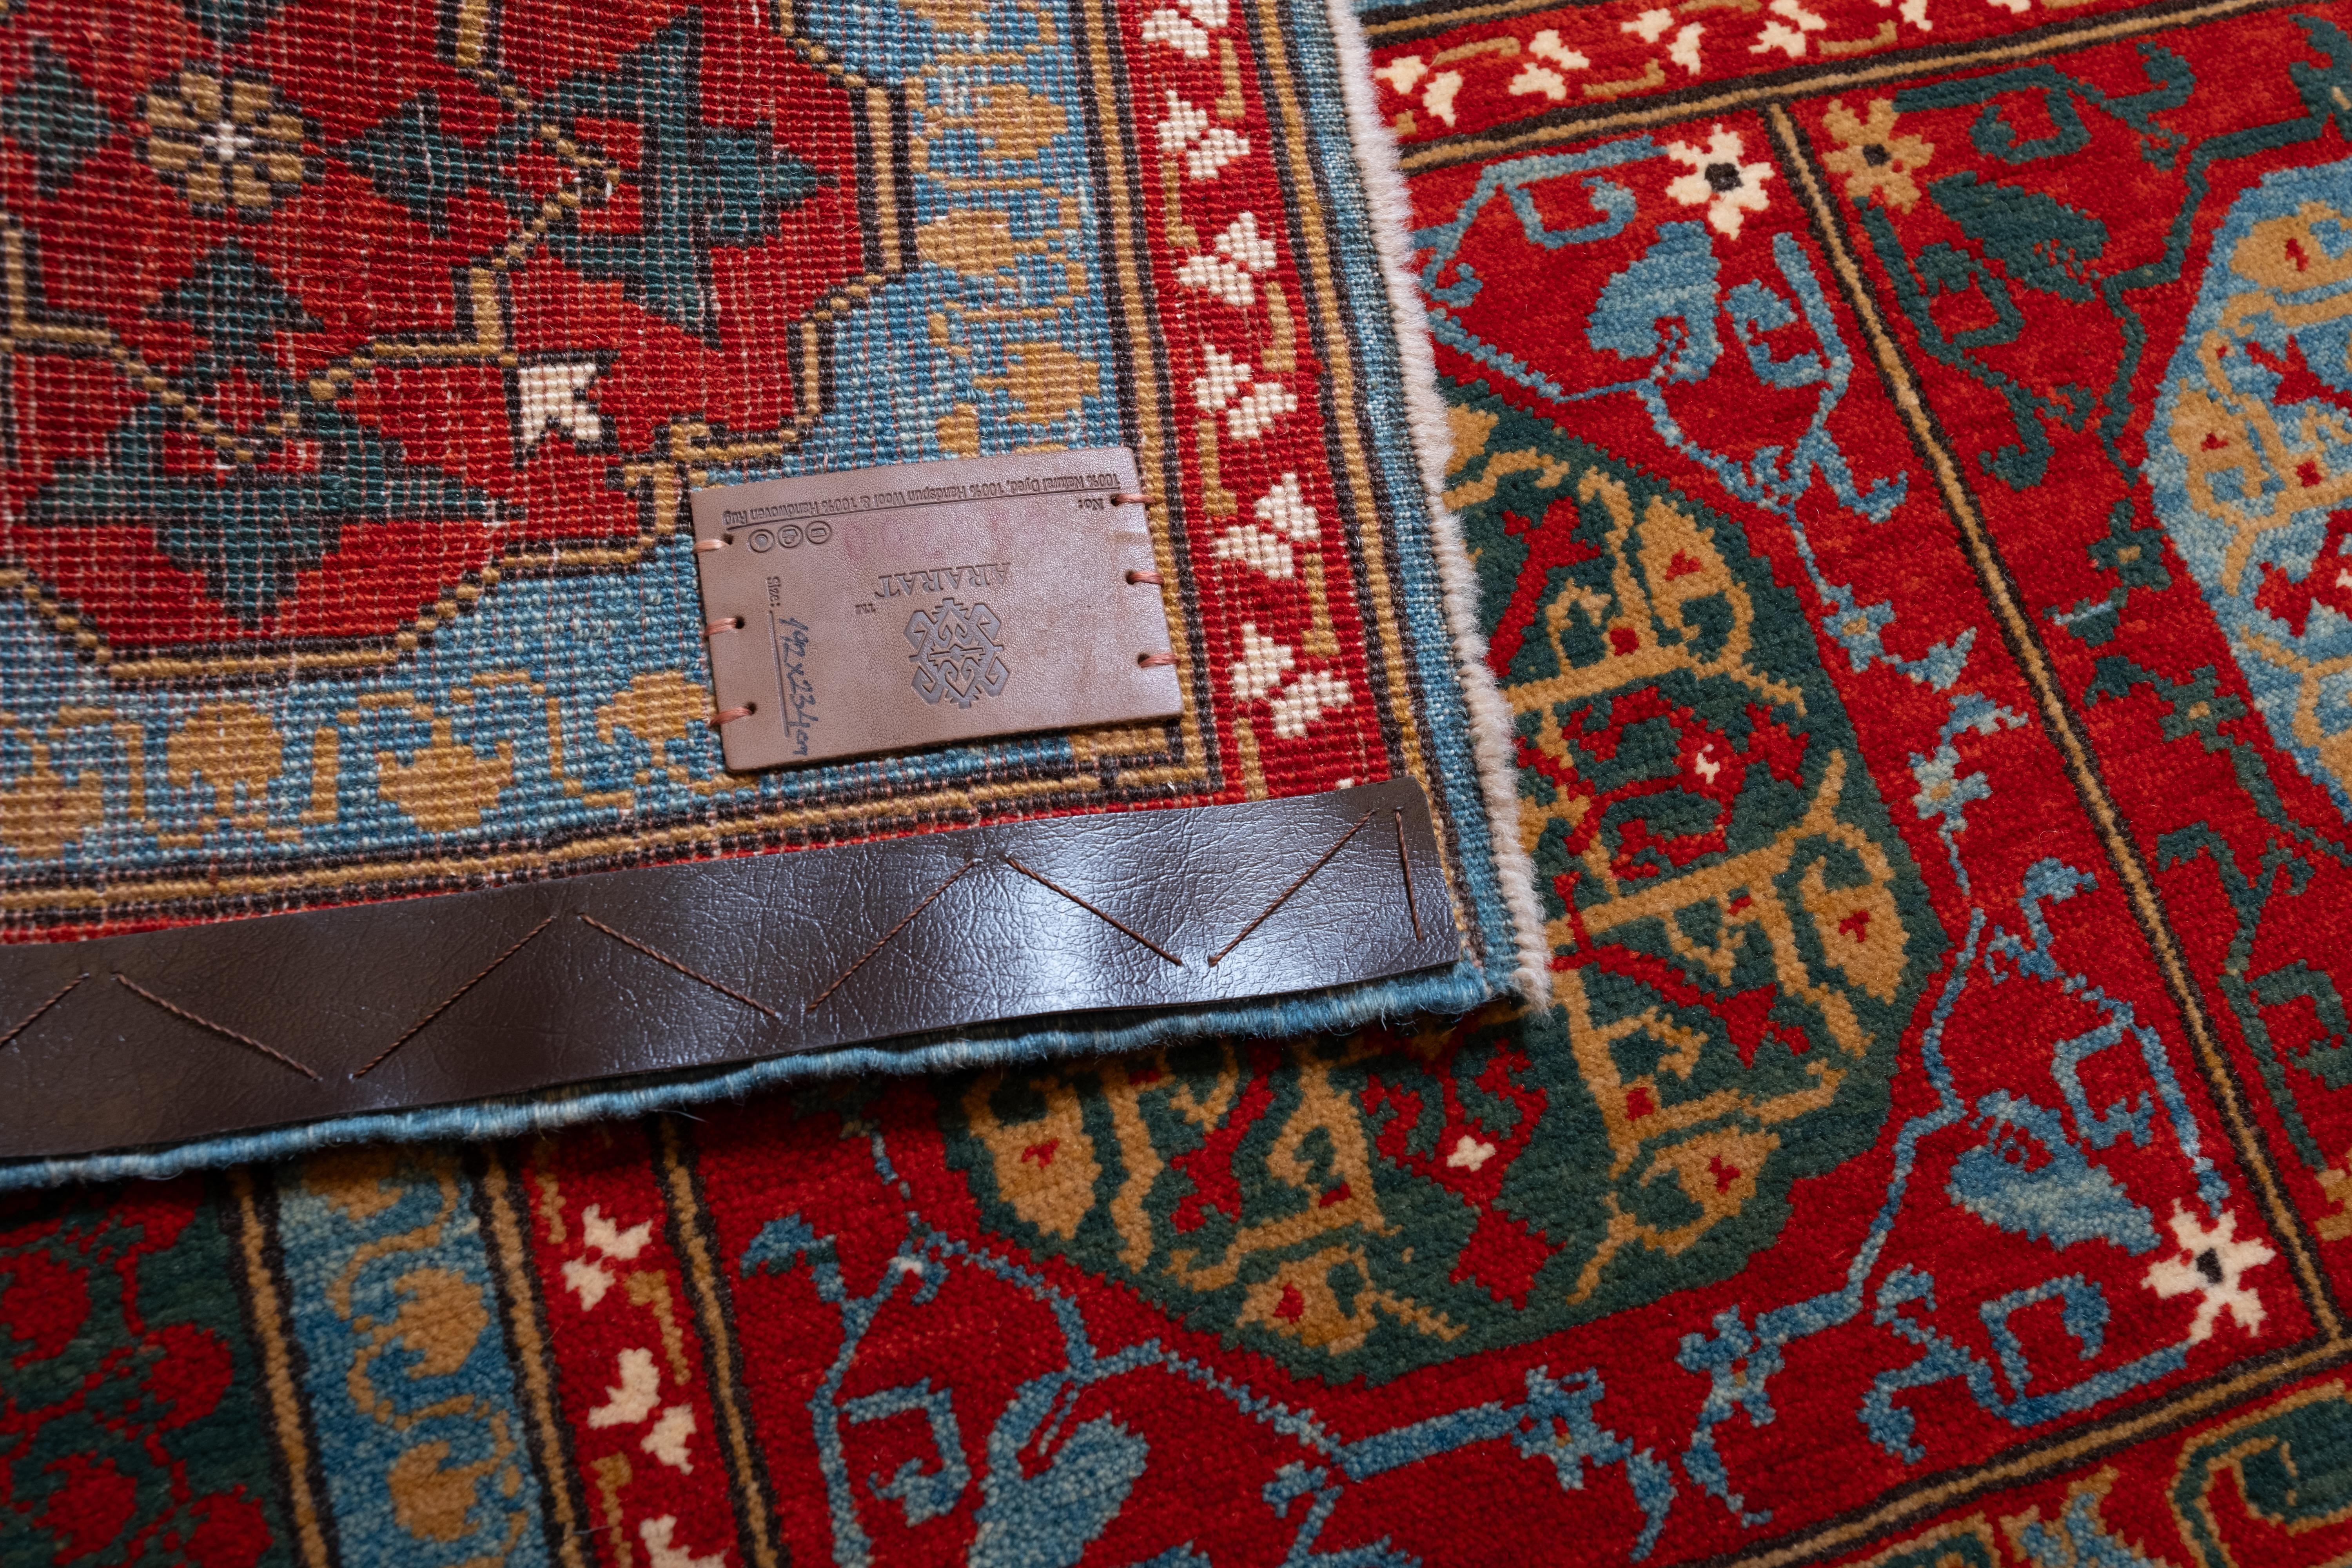 Wool Ararat Rugs The Simonetti Mamluk Carpet 16th C. Revival Rug, Square Natural Dyed For Sale